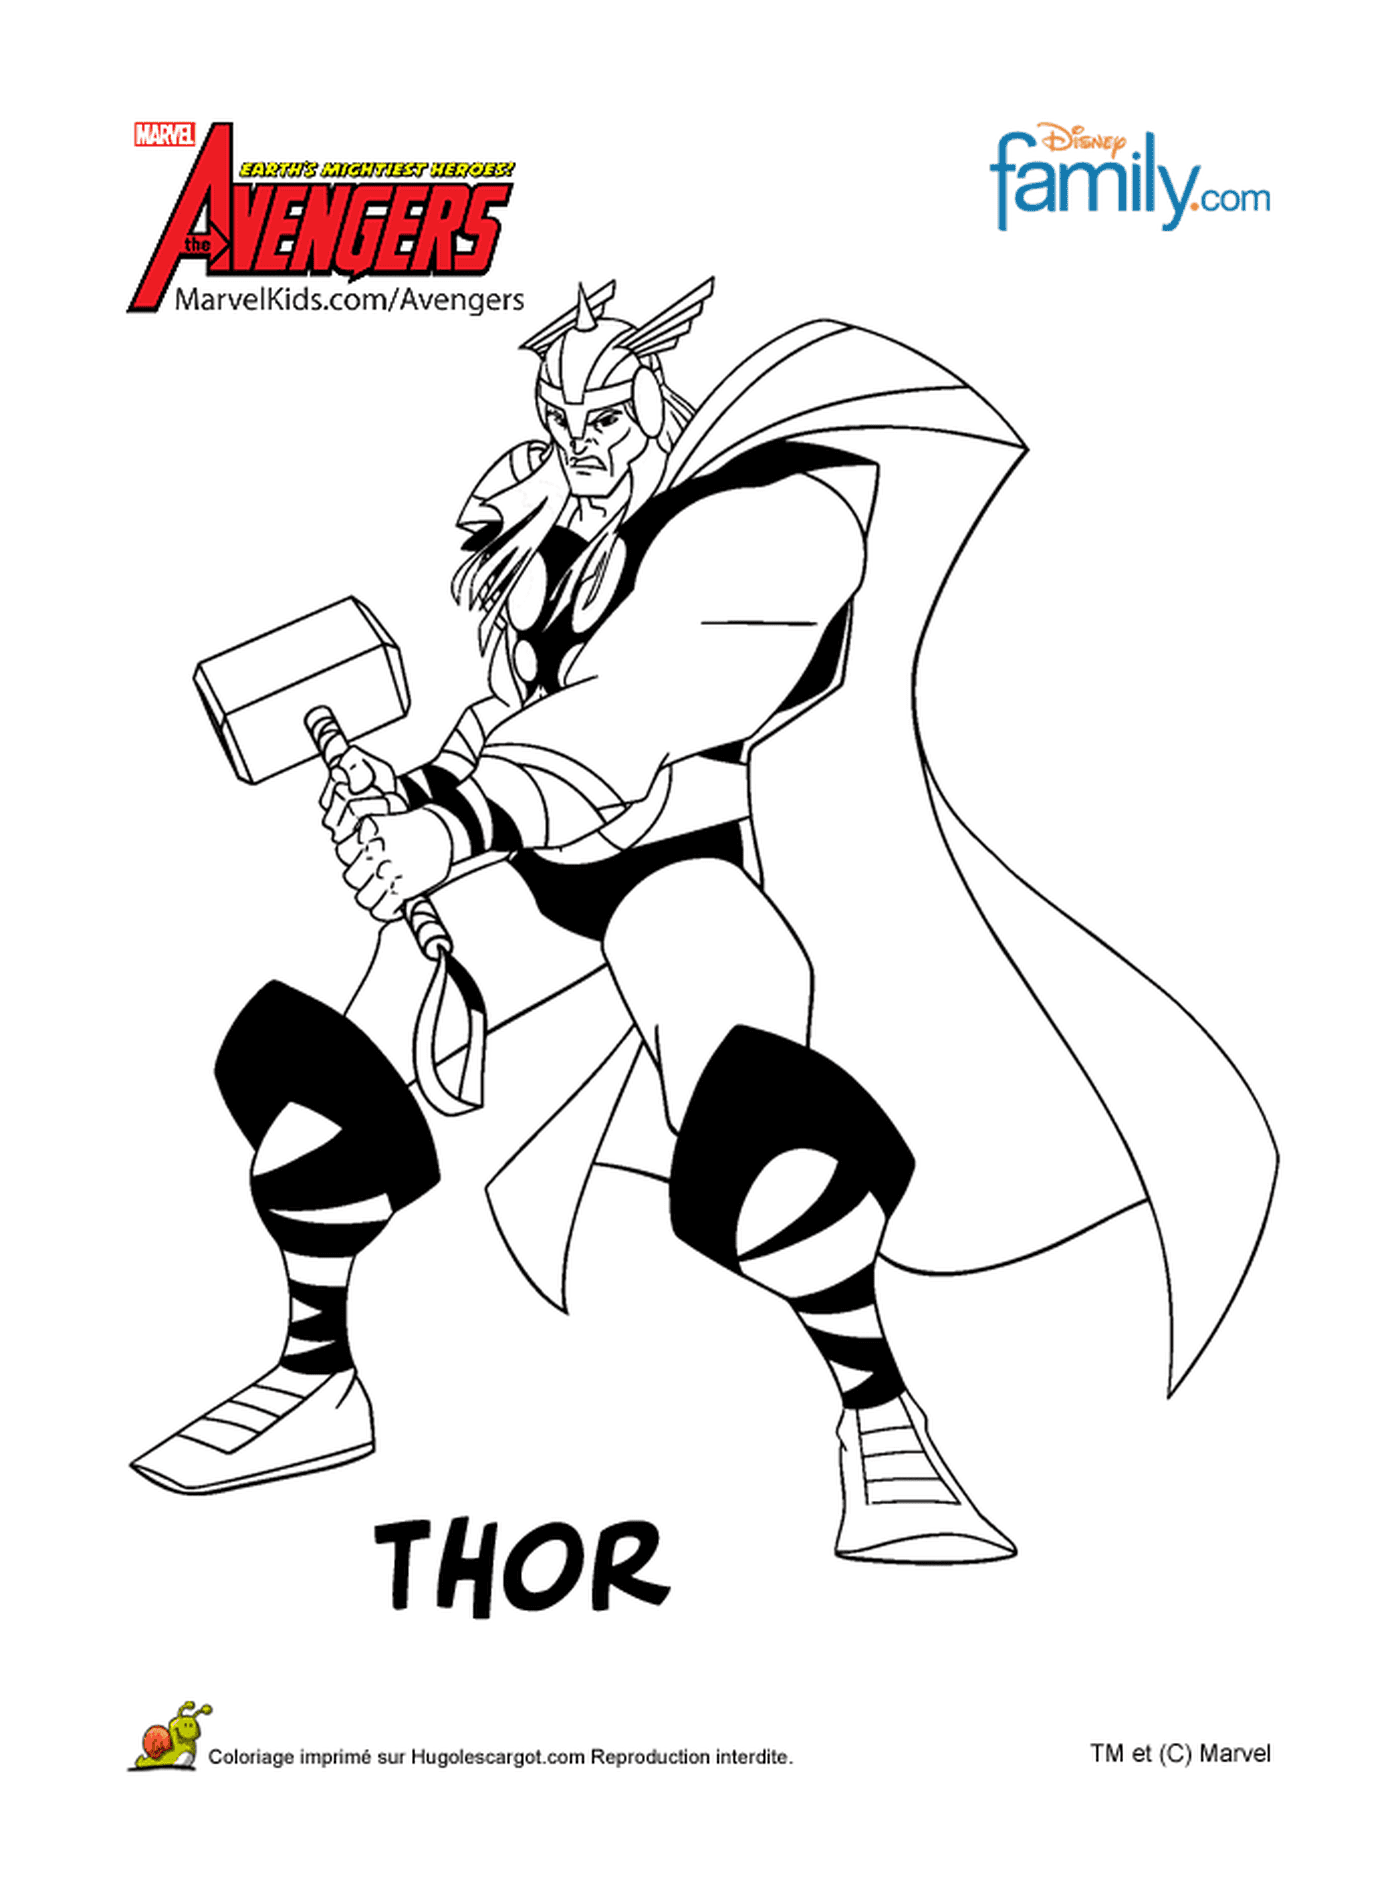  Thor sosteniendo un martillo 